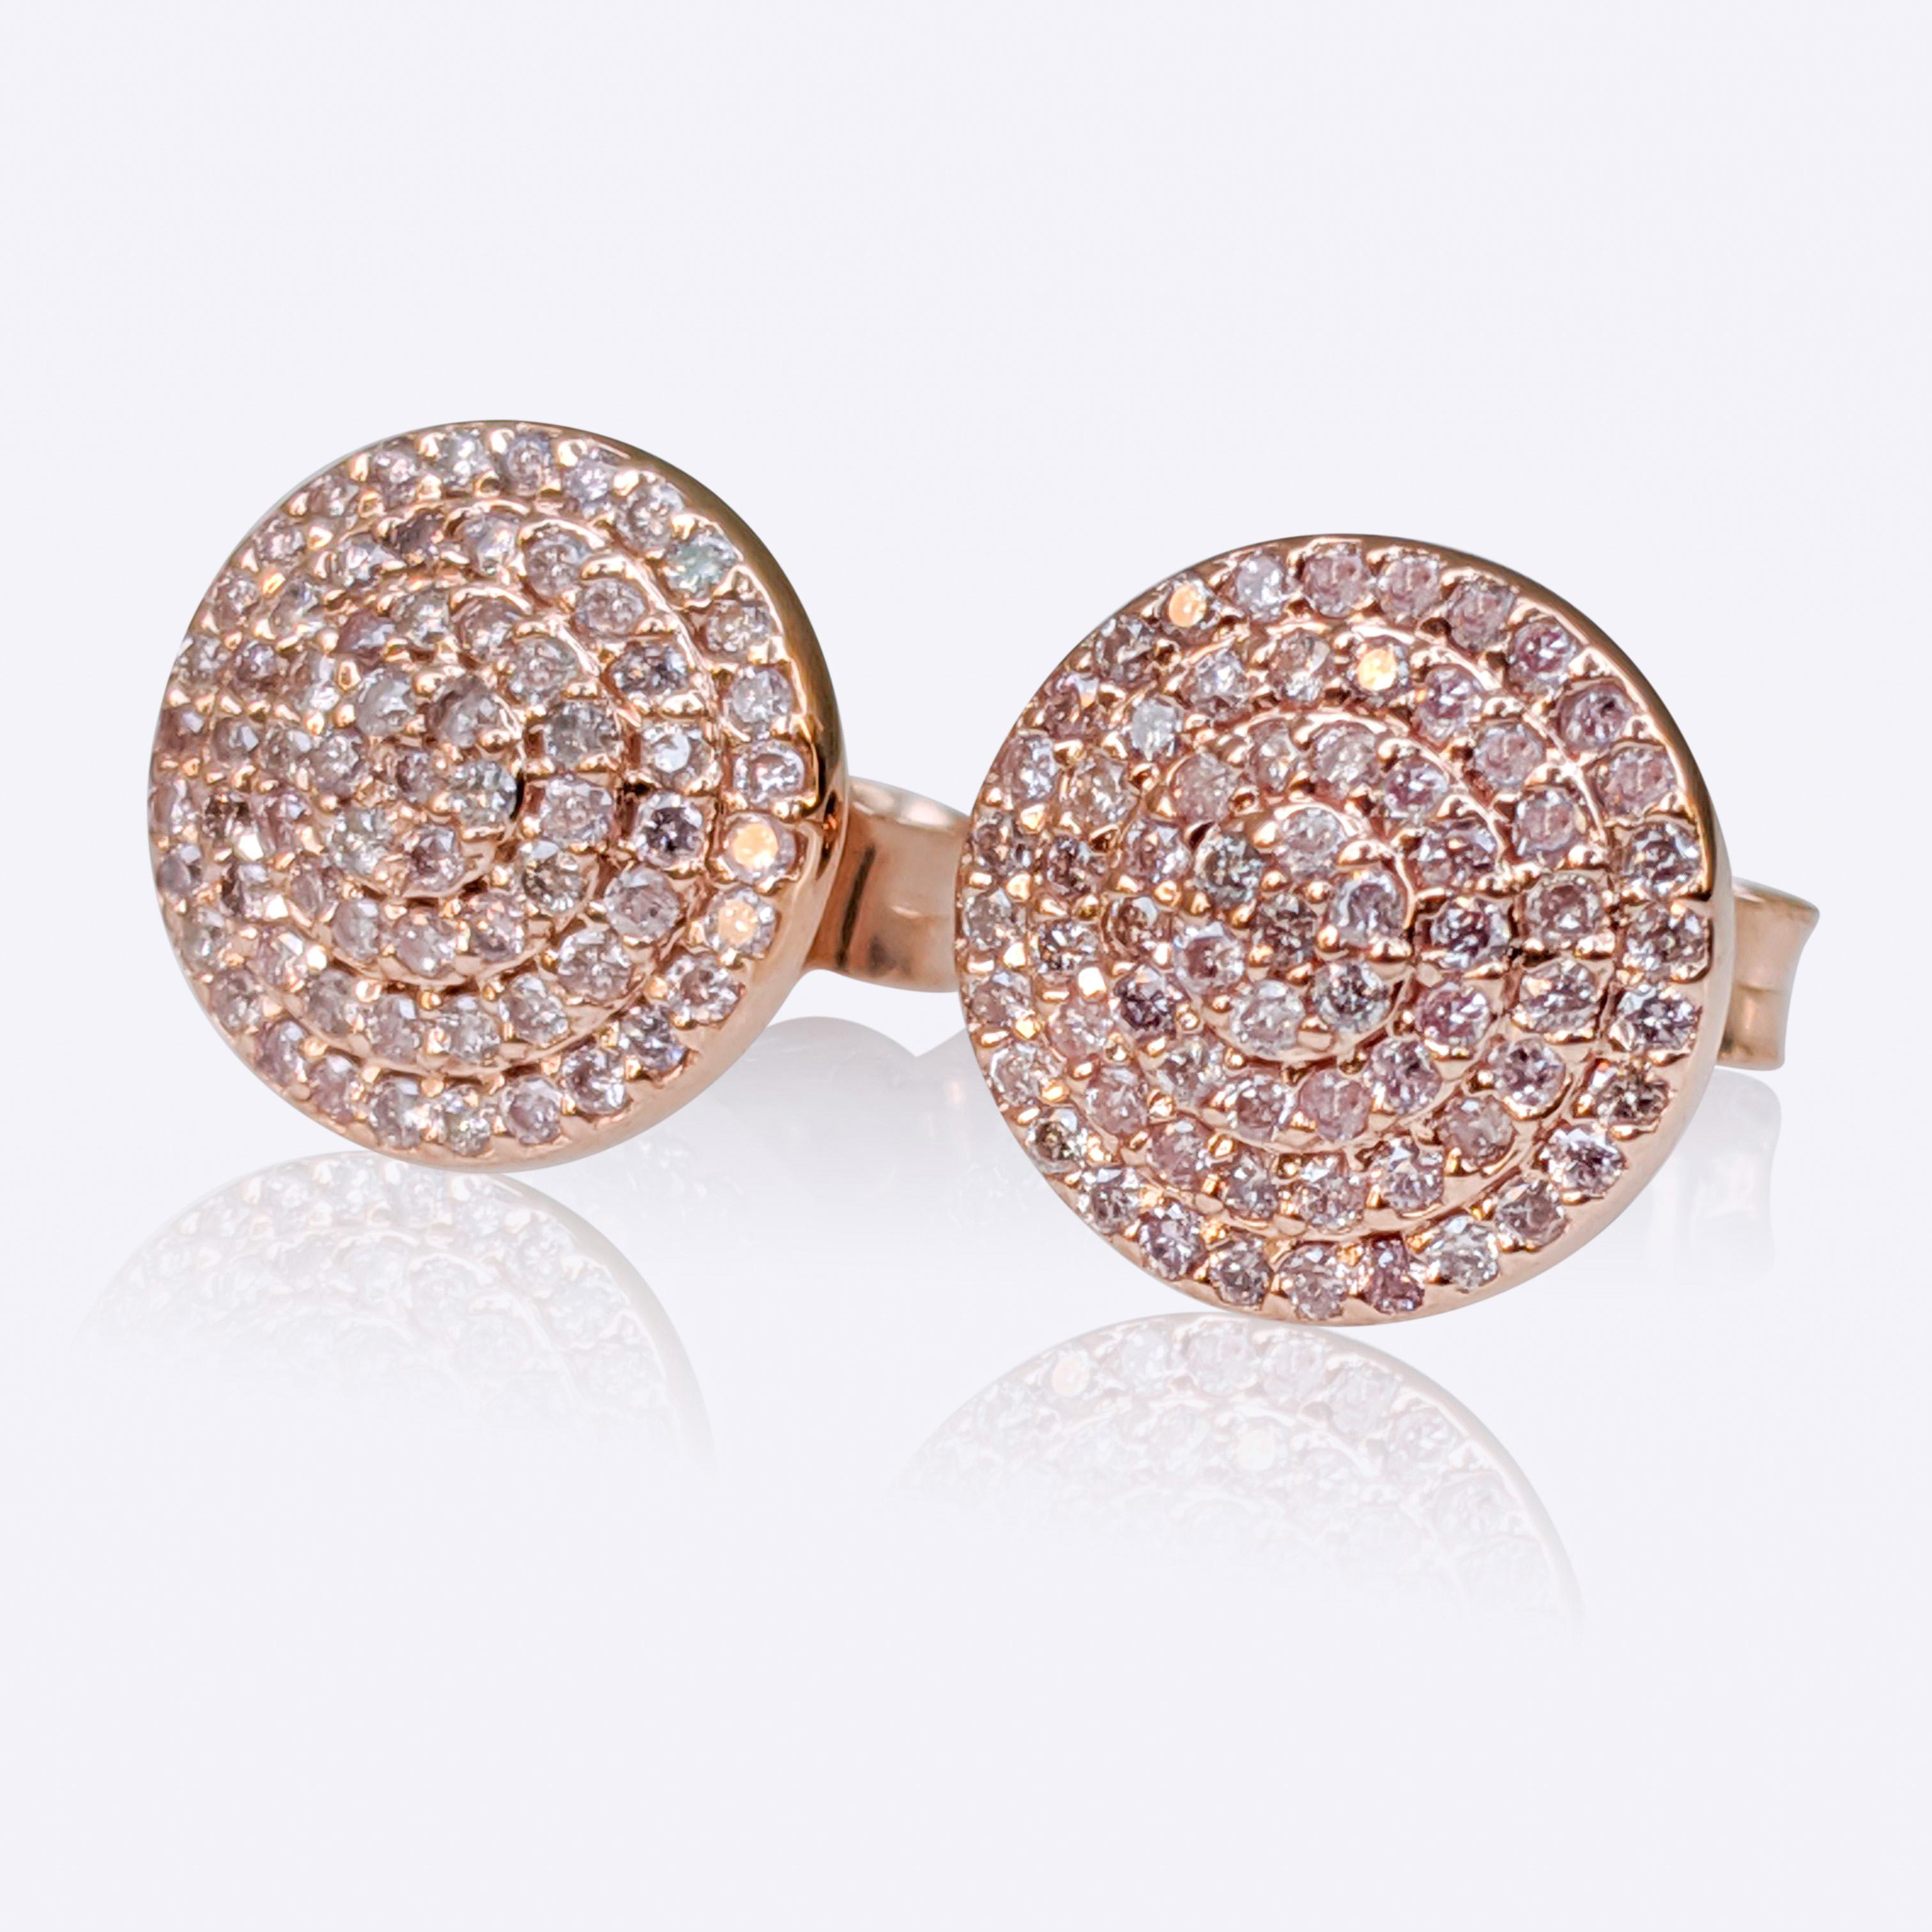 Round Cut NO RESERVE! 0.30 Carat Fancy Pink Diamond - 14 kt. Pink gold - Earrings